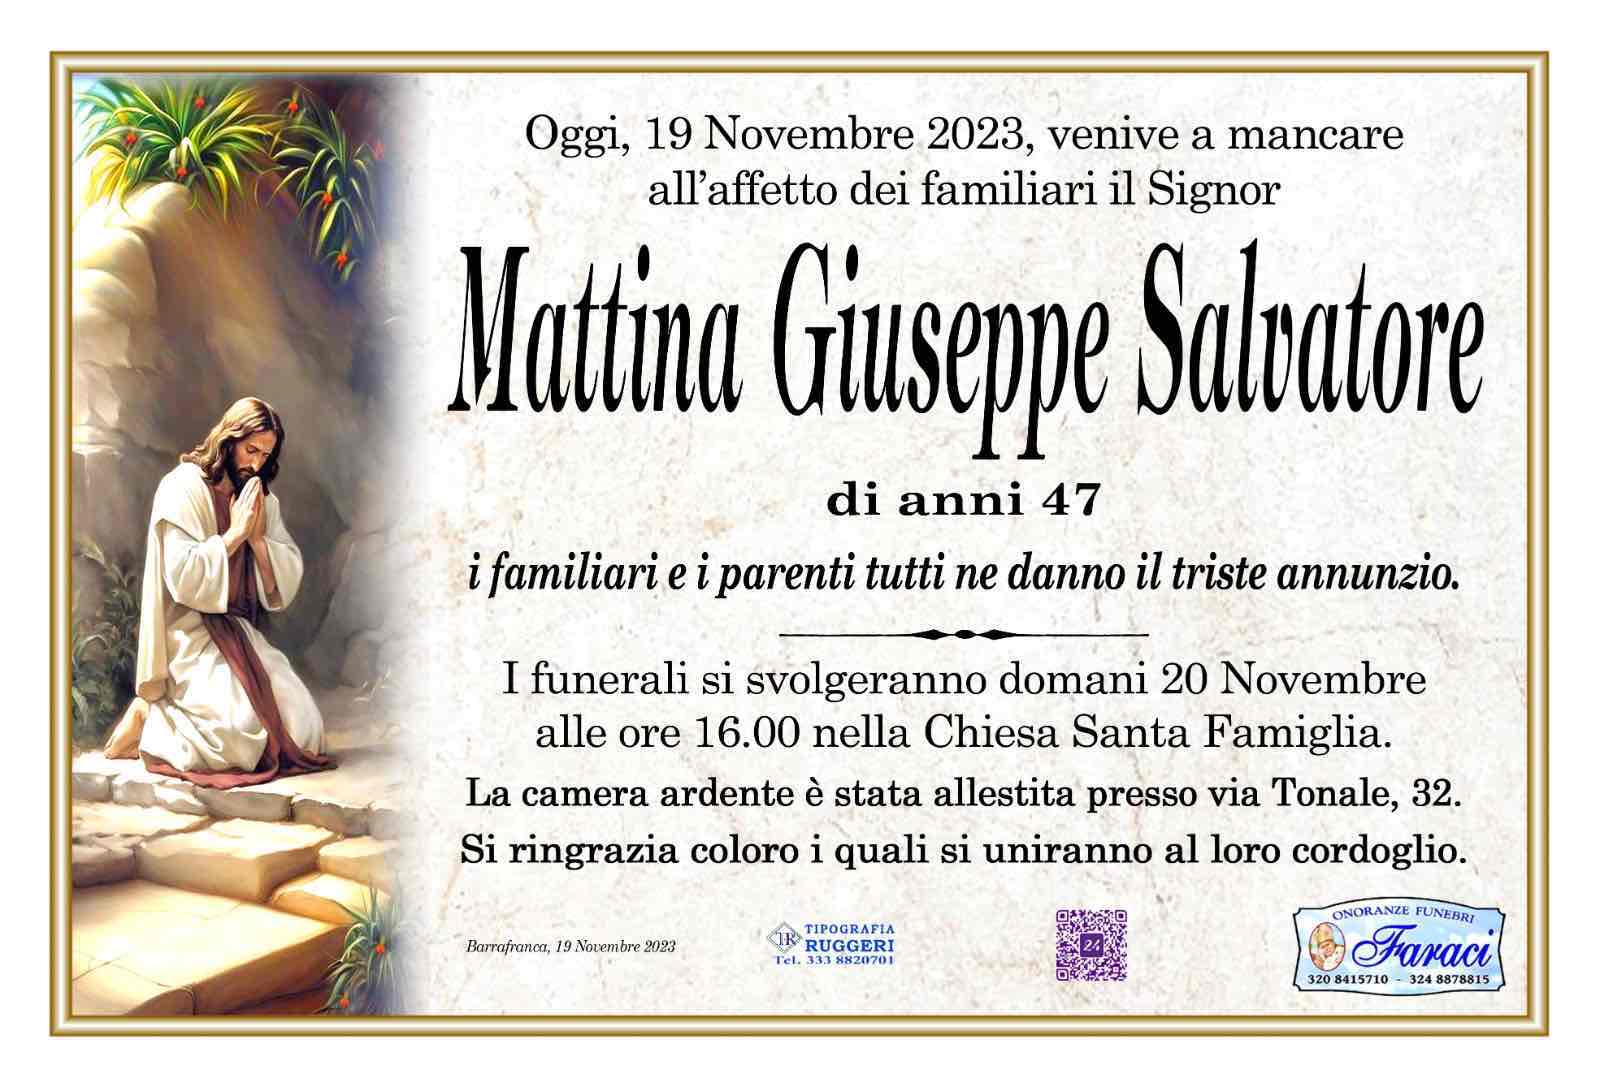 Giuseppe Salvatore Mattina